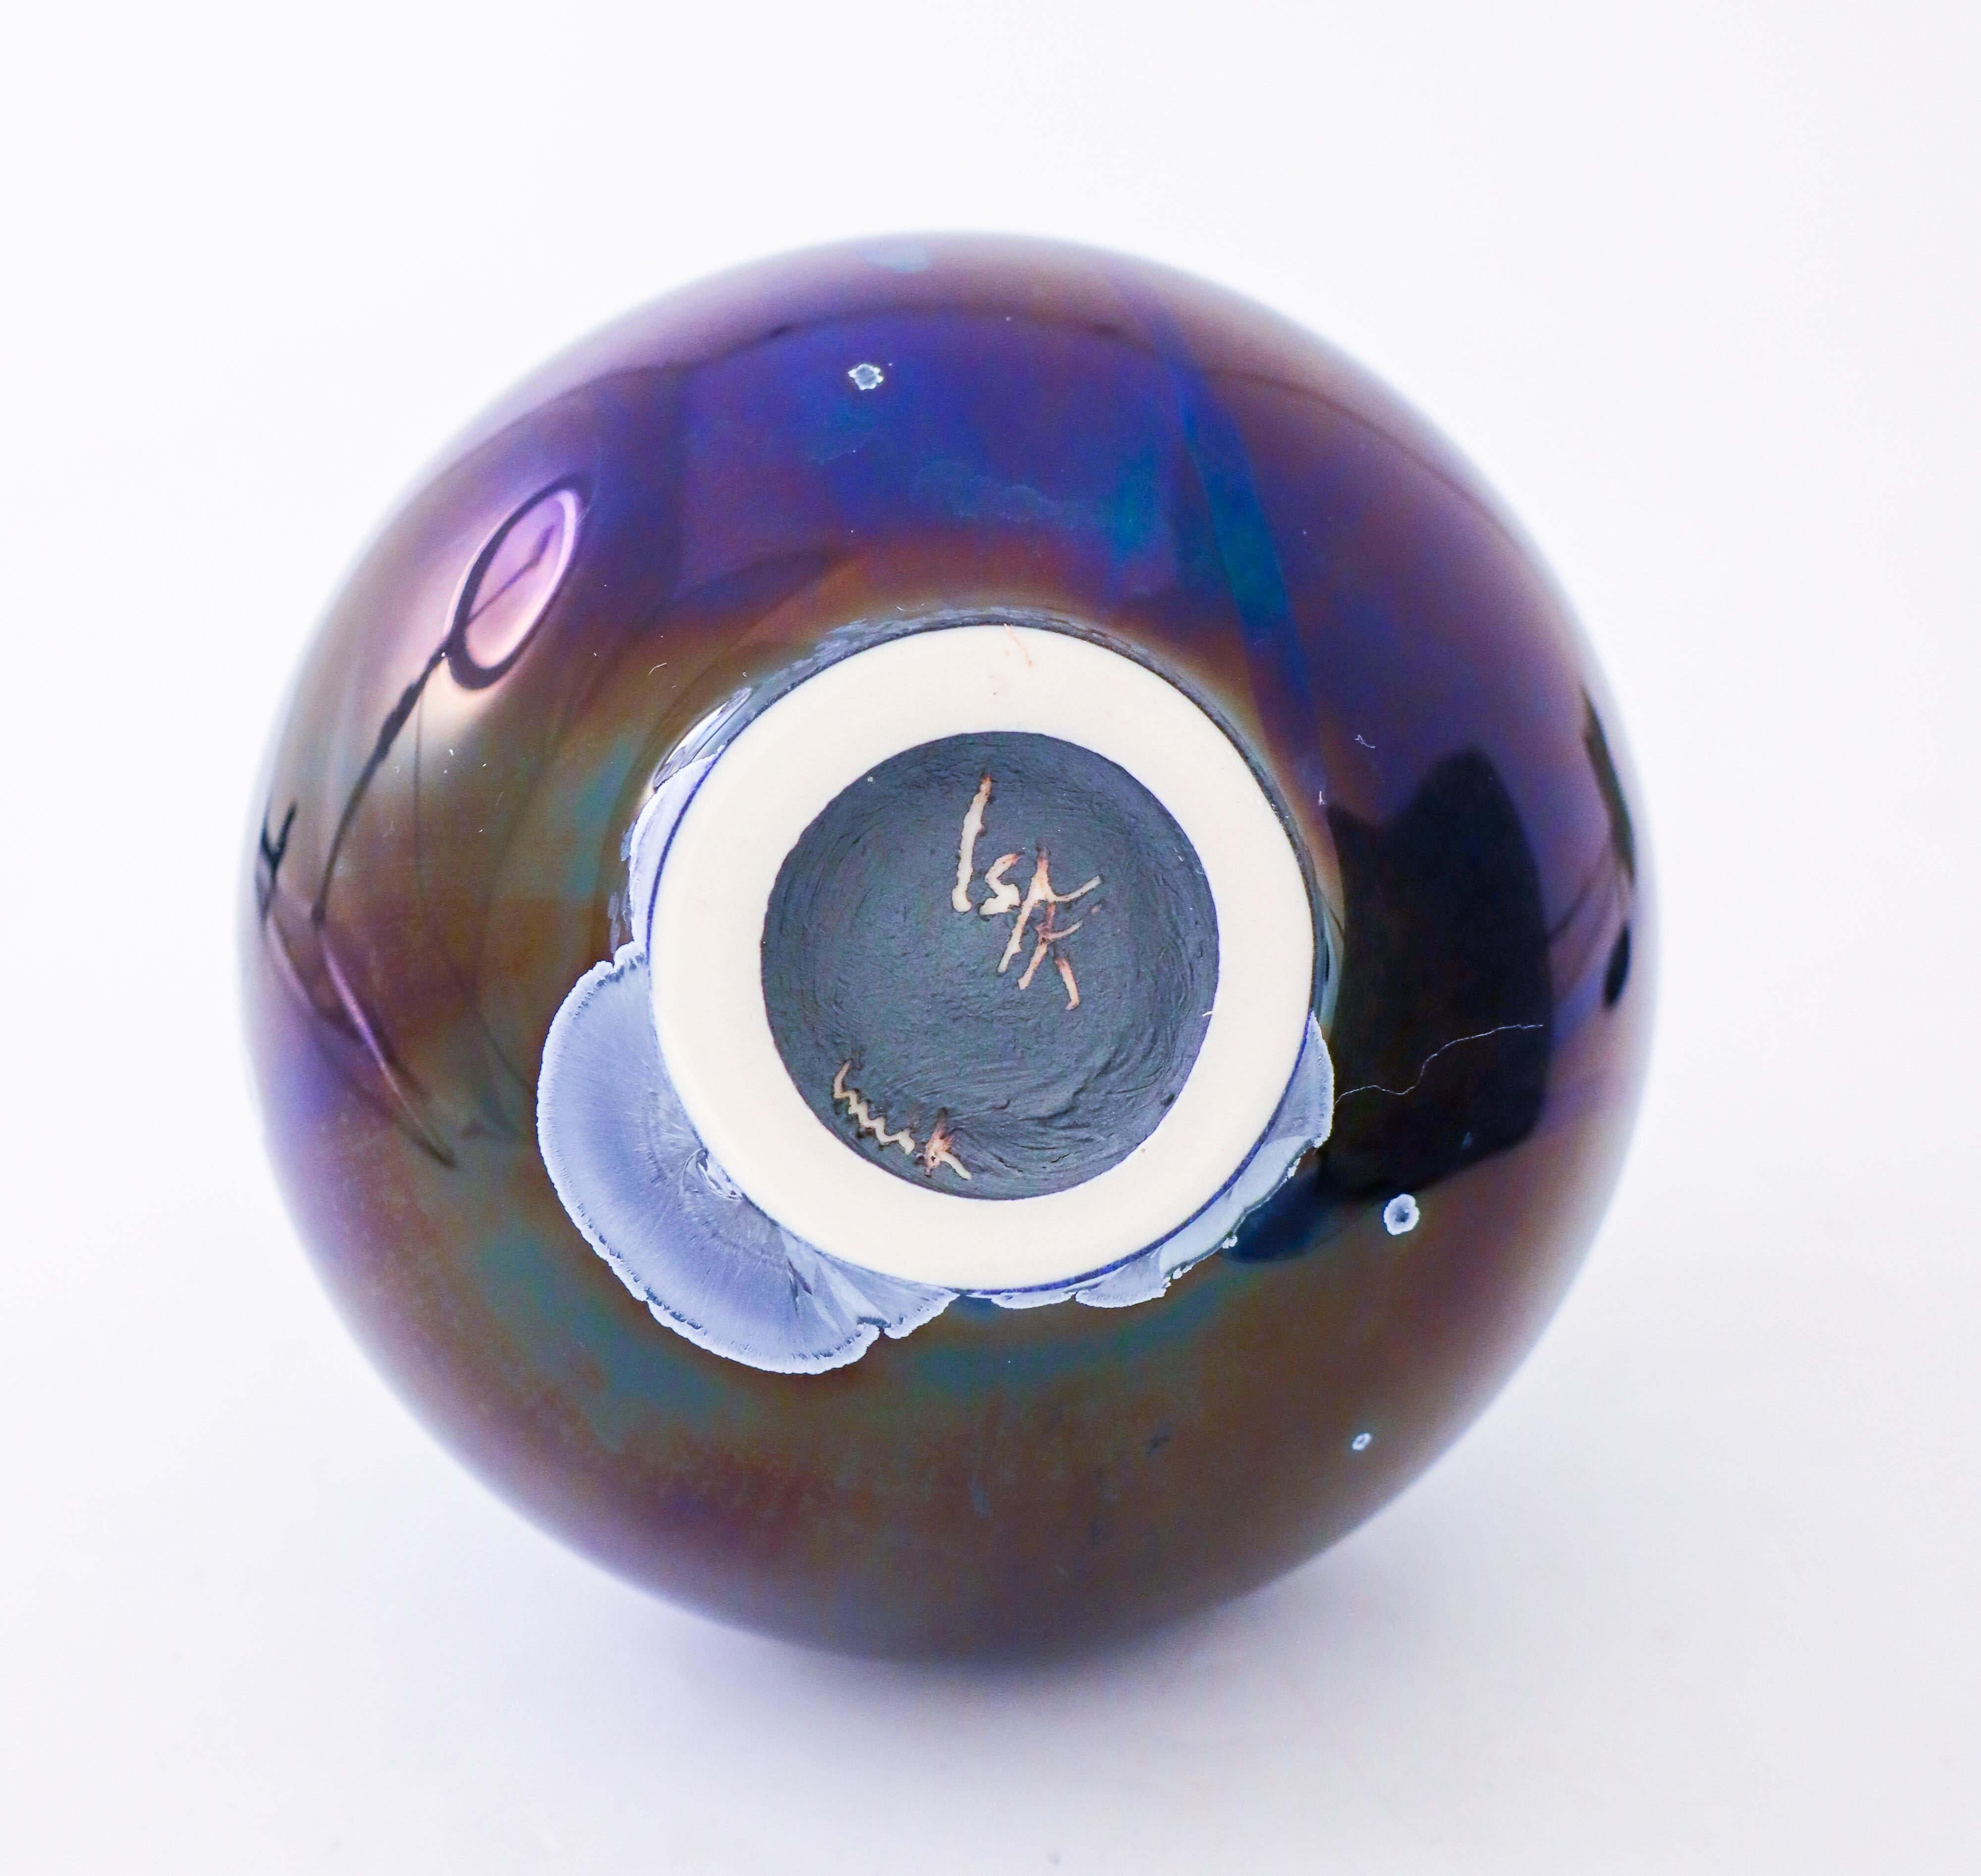 Isak Isaksson Blue Ceramic Vase Crystalline Glaze Contemporary Artist 2